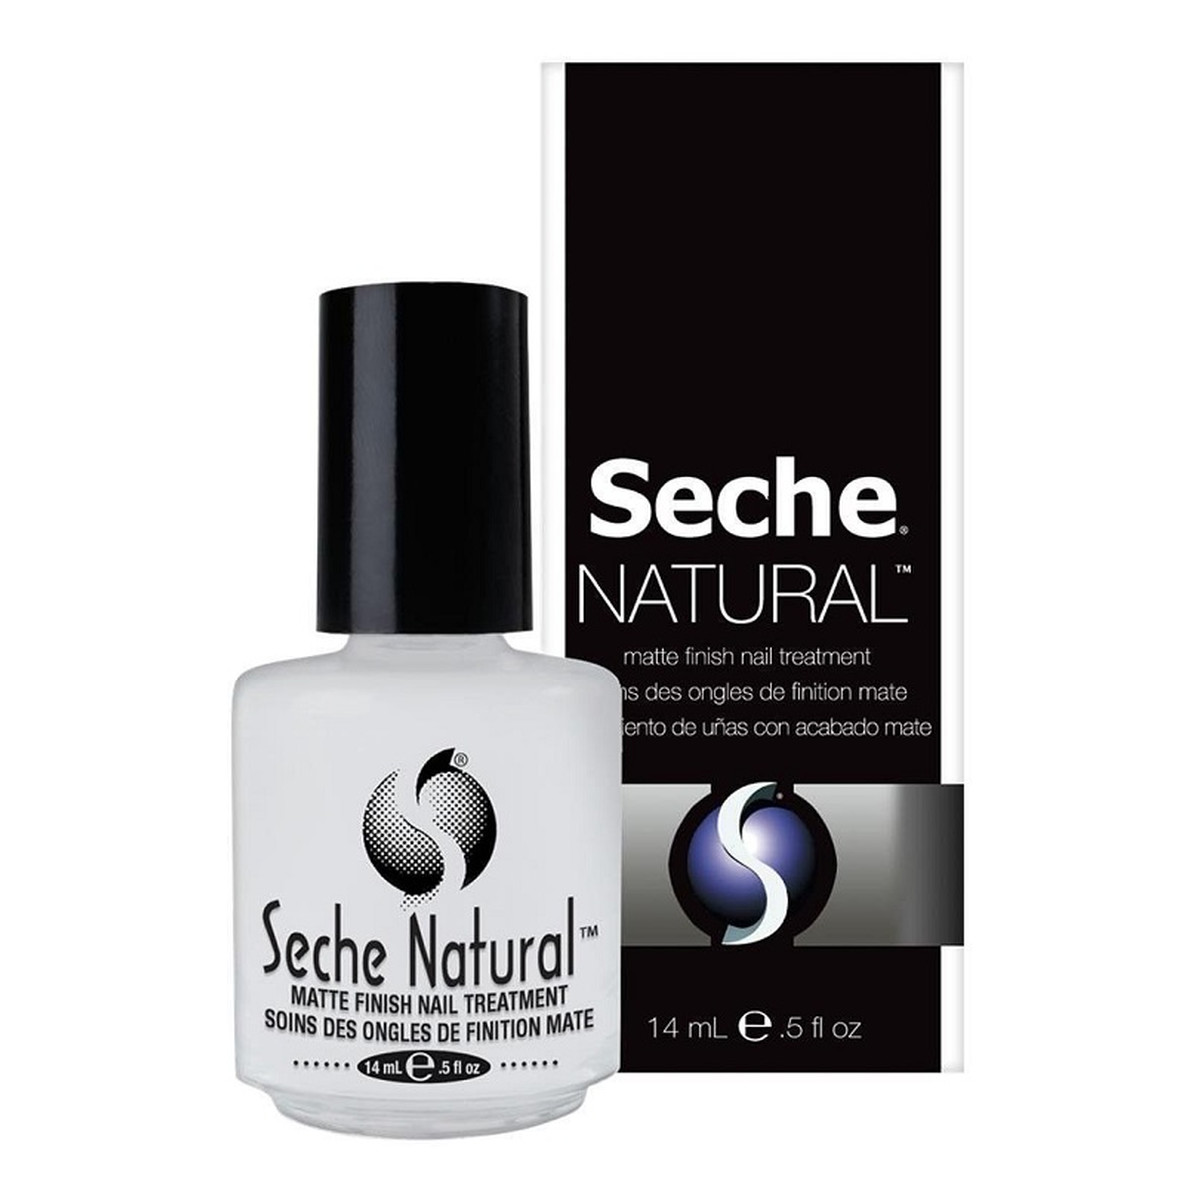 Seche Natural Matte Finish Nail Treatment odżywka pod lakier do paznokci 14ml